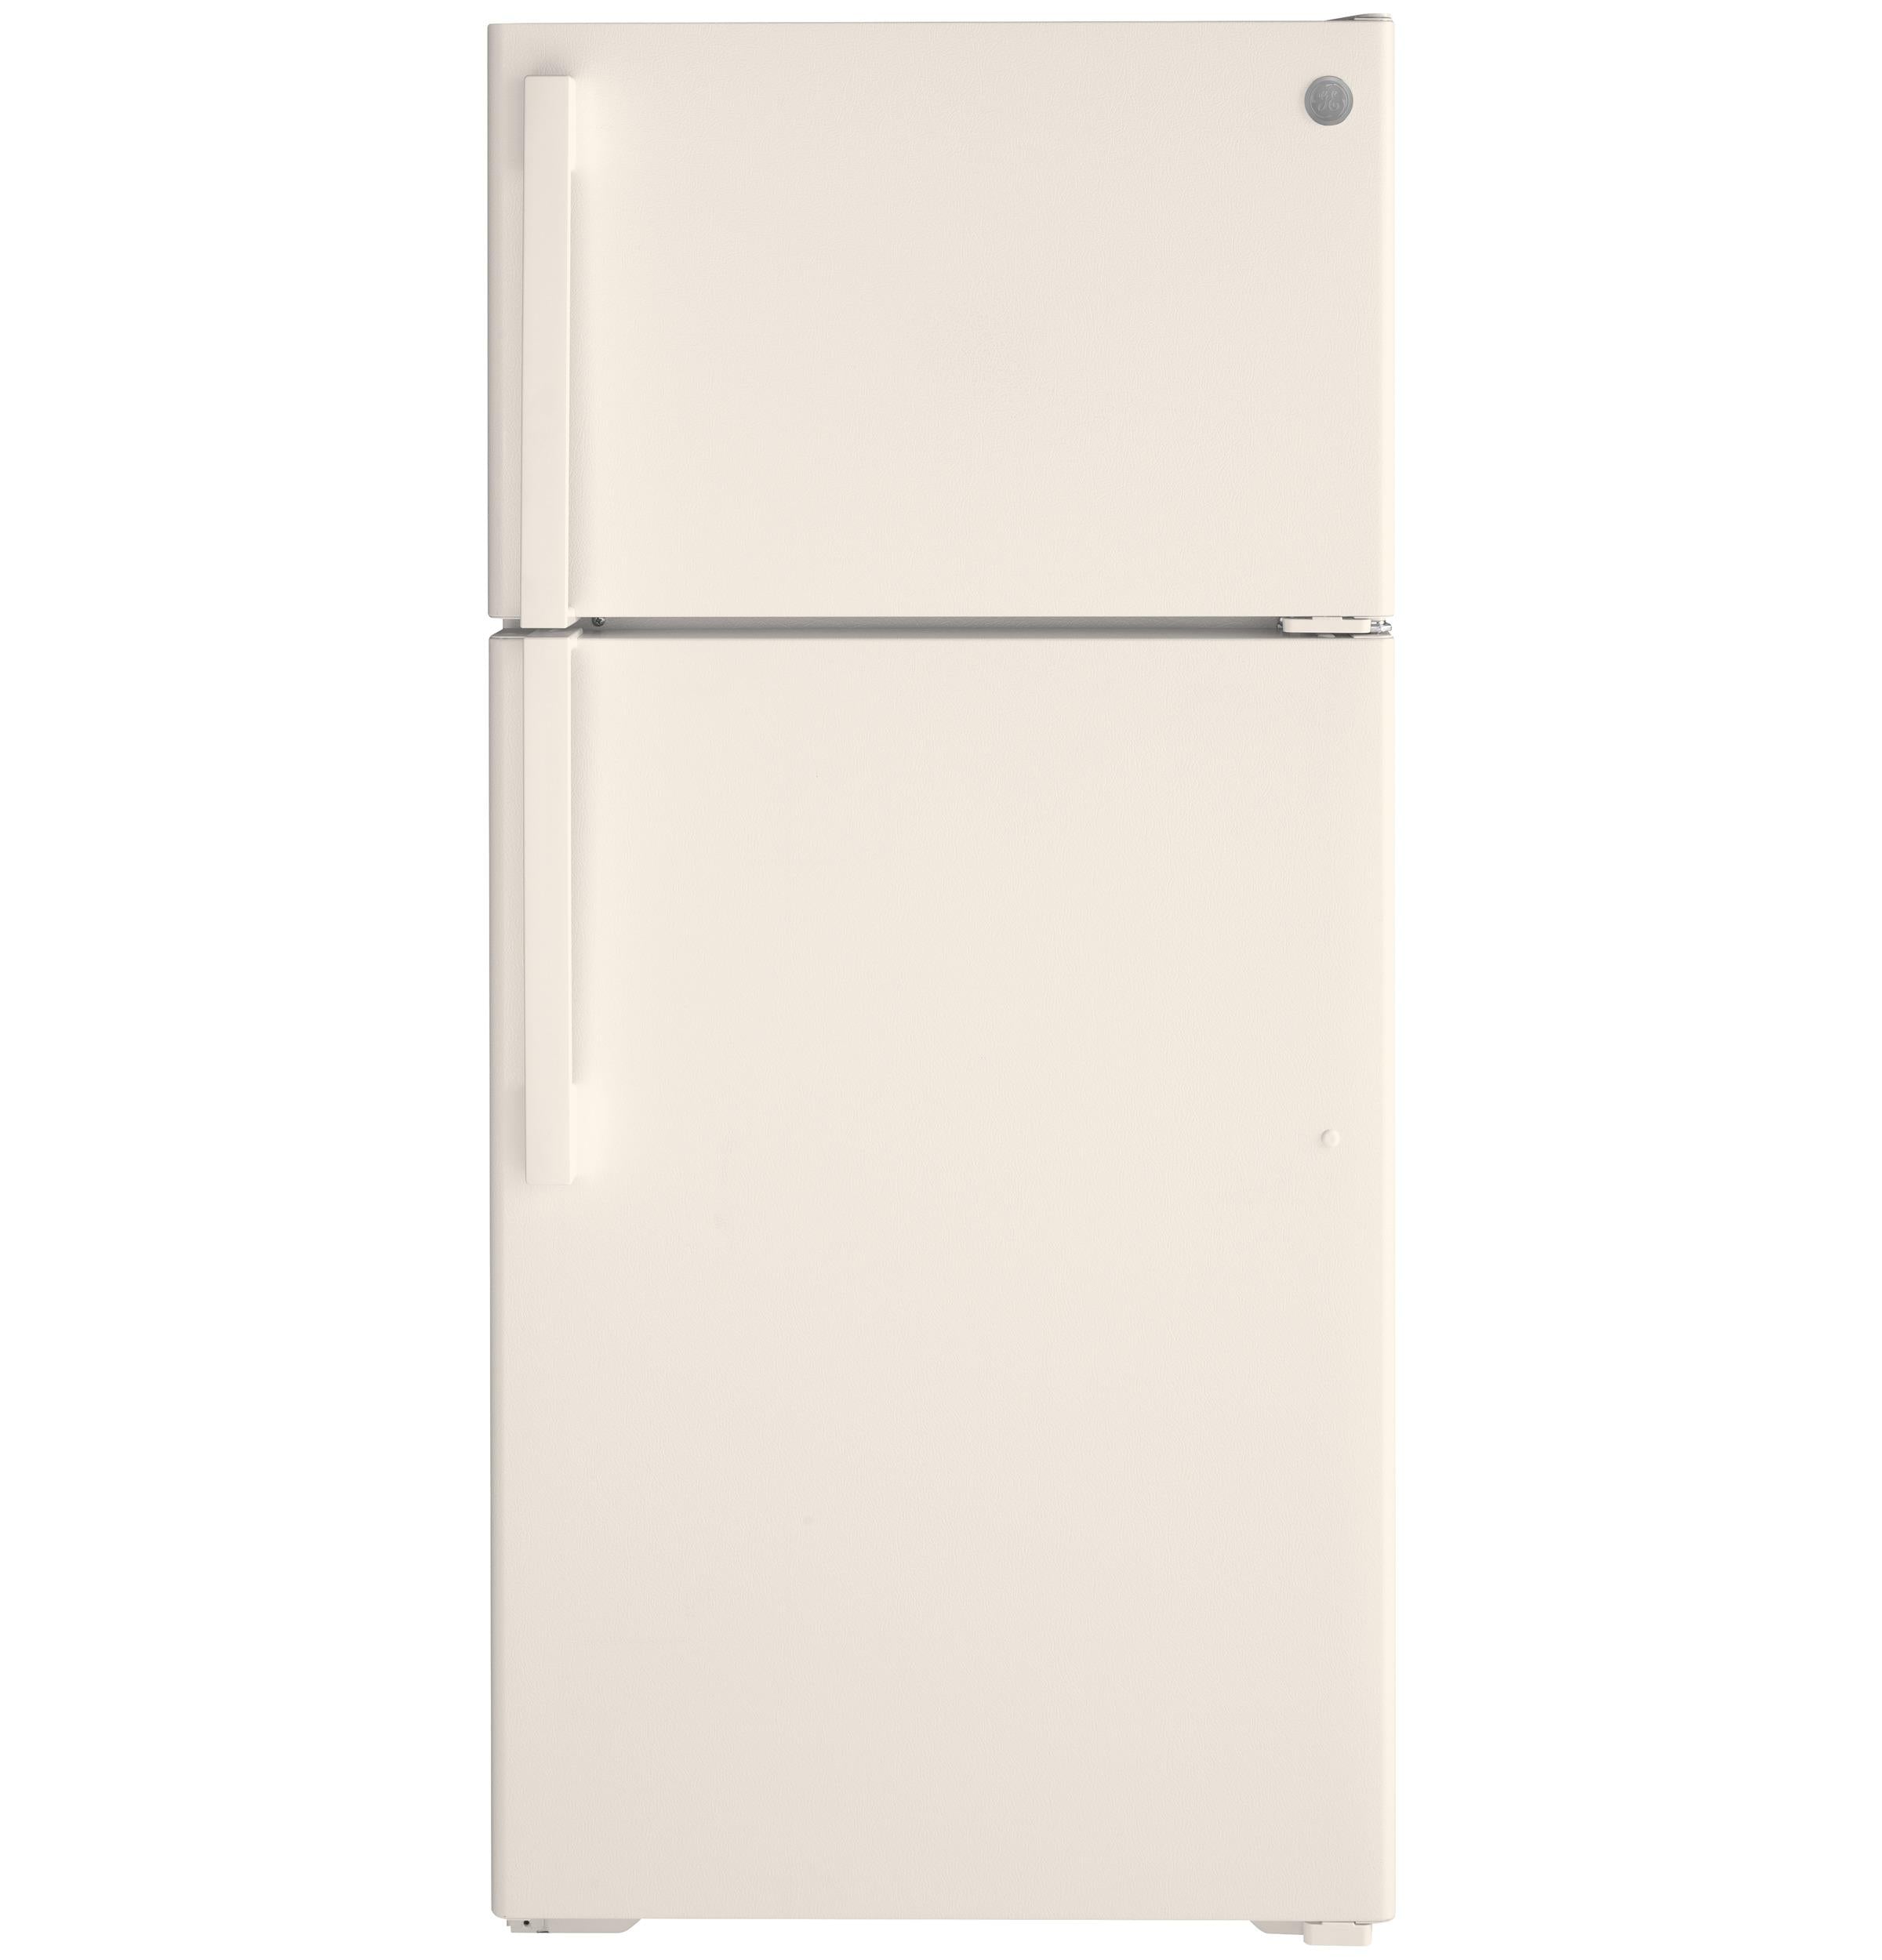 GE® ENERGY STAR® 15.6 Cu. Ft. Top-Freezer Refrigerator